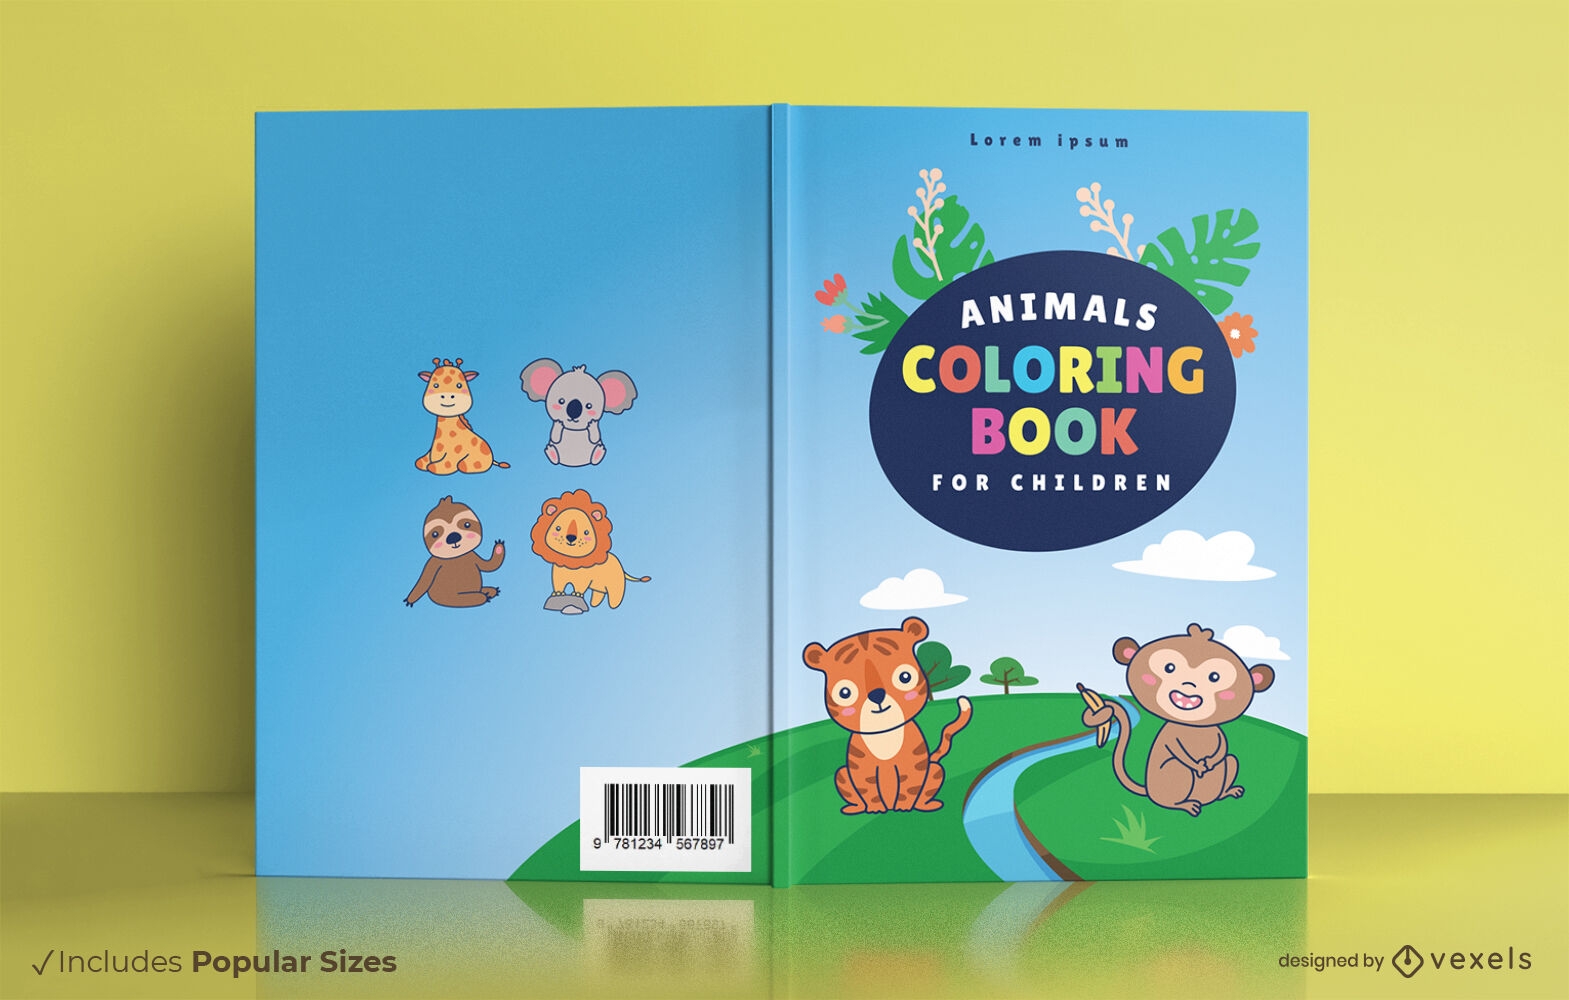 Descarga Vector De Diseño De Portada De Libro Para Colorear Para Niños